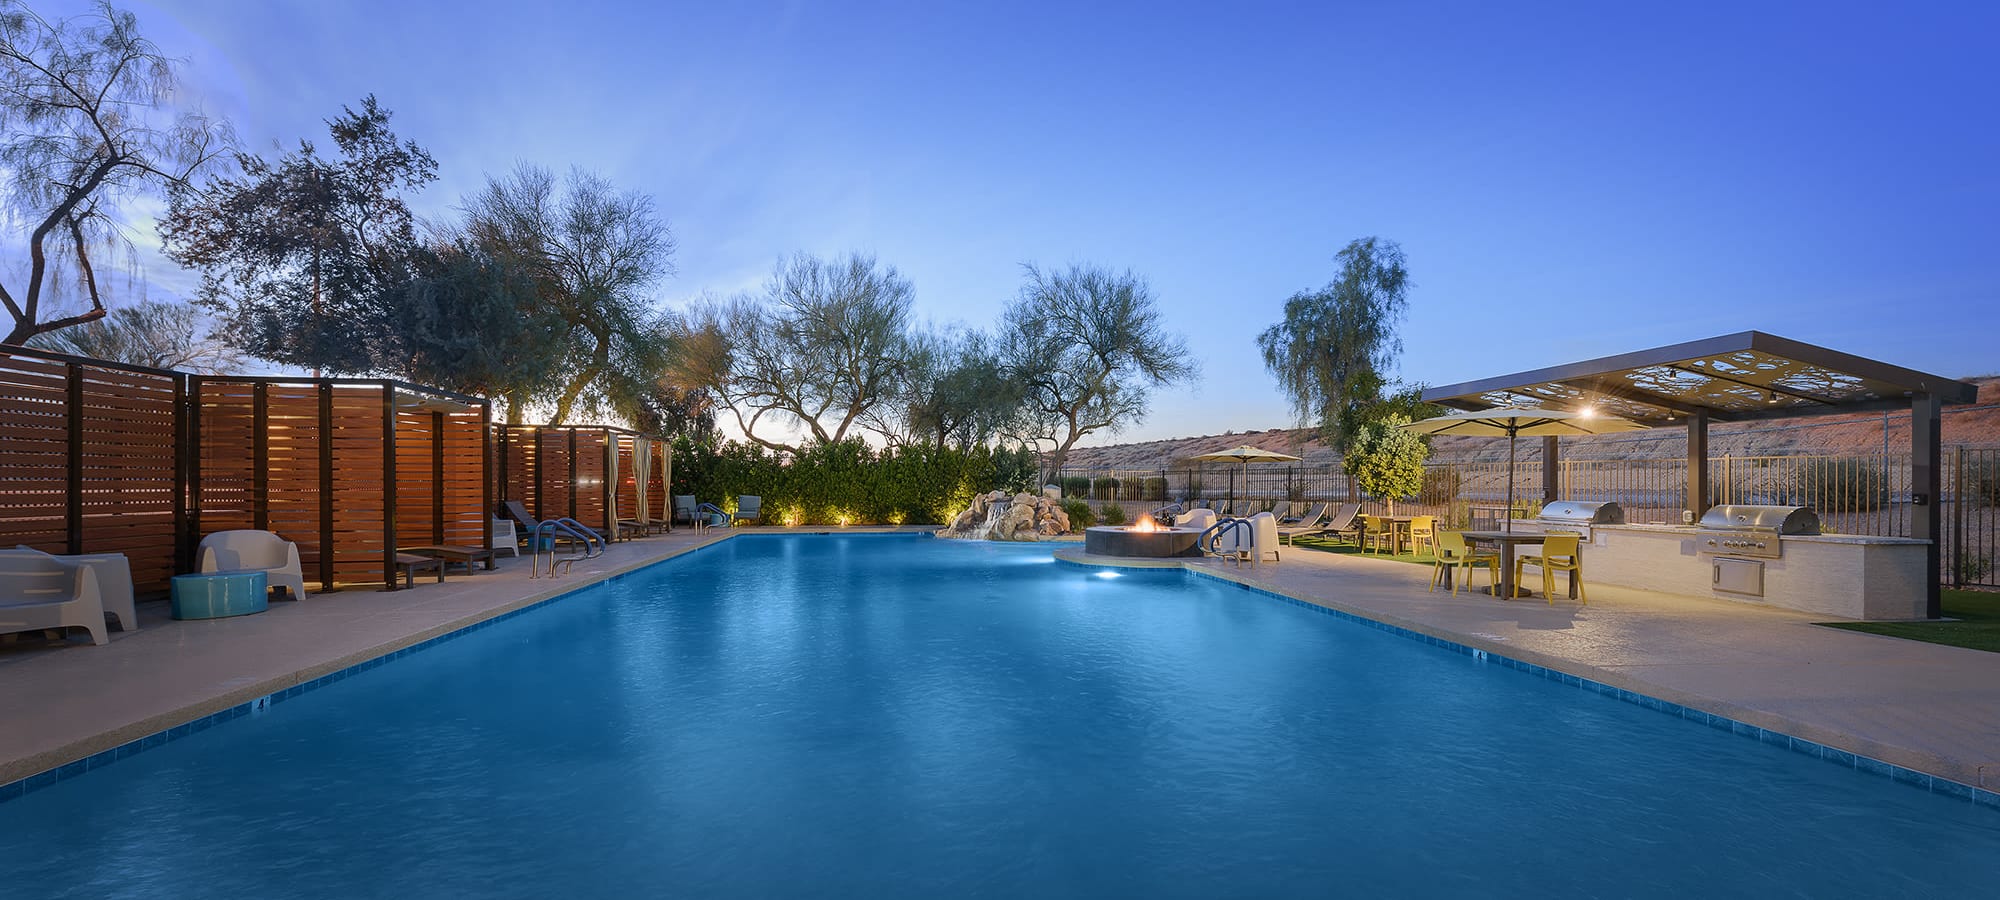 Resort-Style pool at dusk at The Regents at Scottsdale in Scottsdale, Arizona